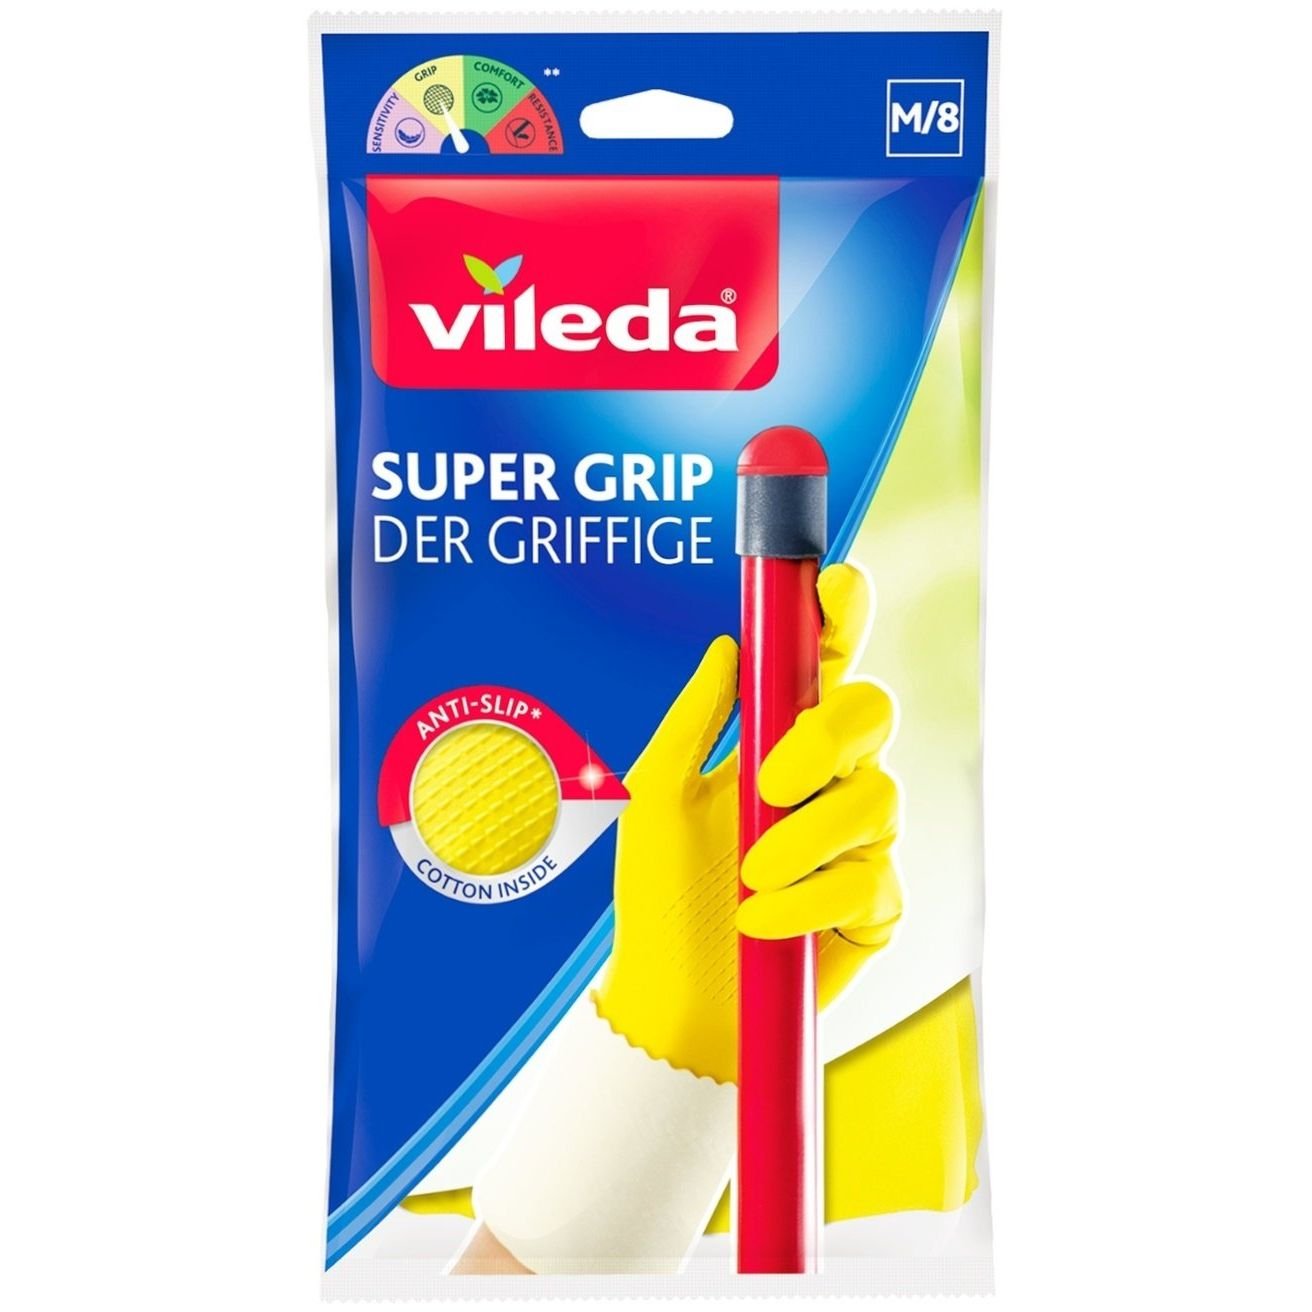 Перчатки для хозяйственных работ Vileda Super Grip, размер М (8001940003351) - фото 1